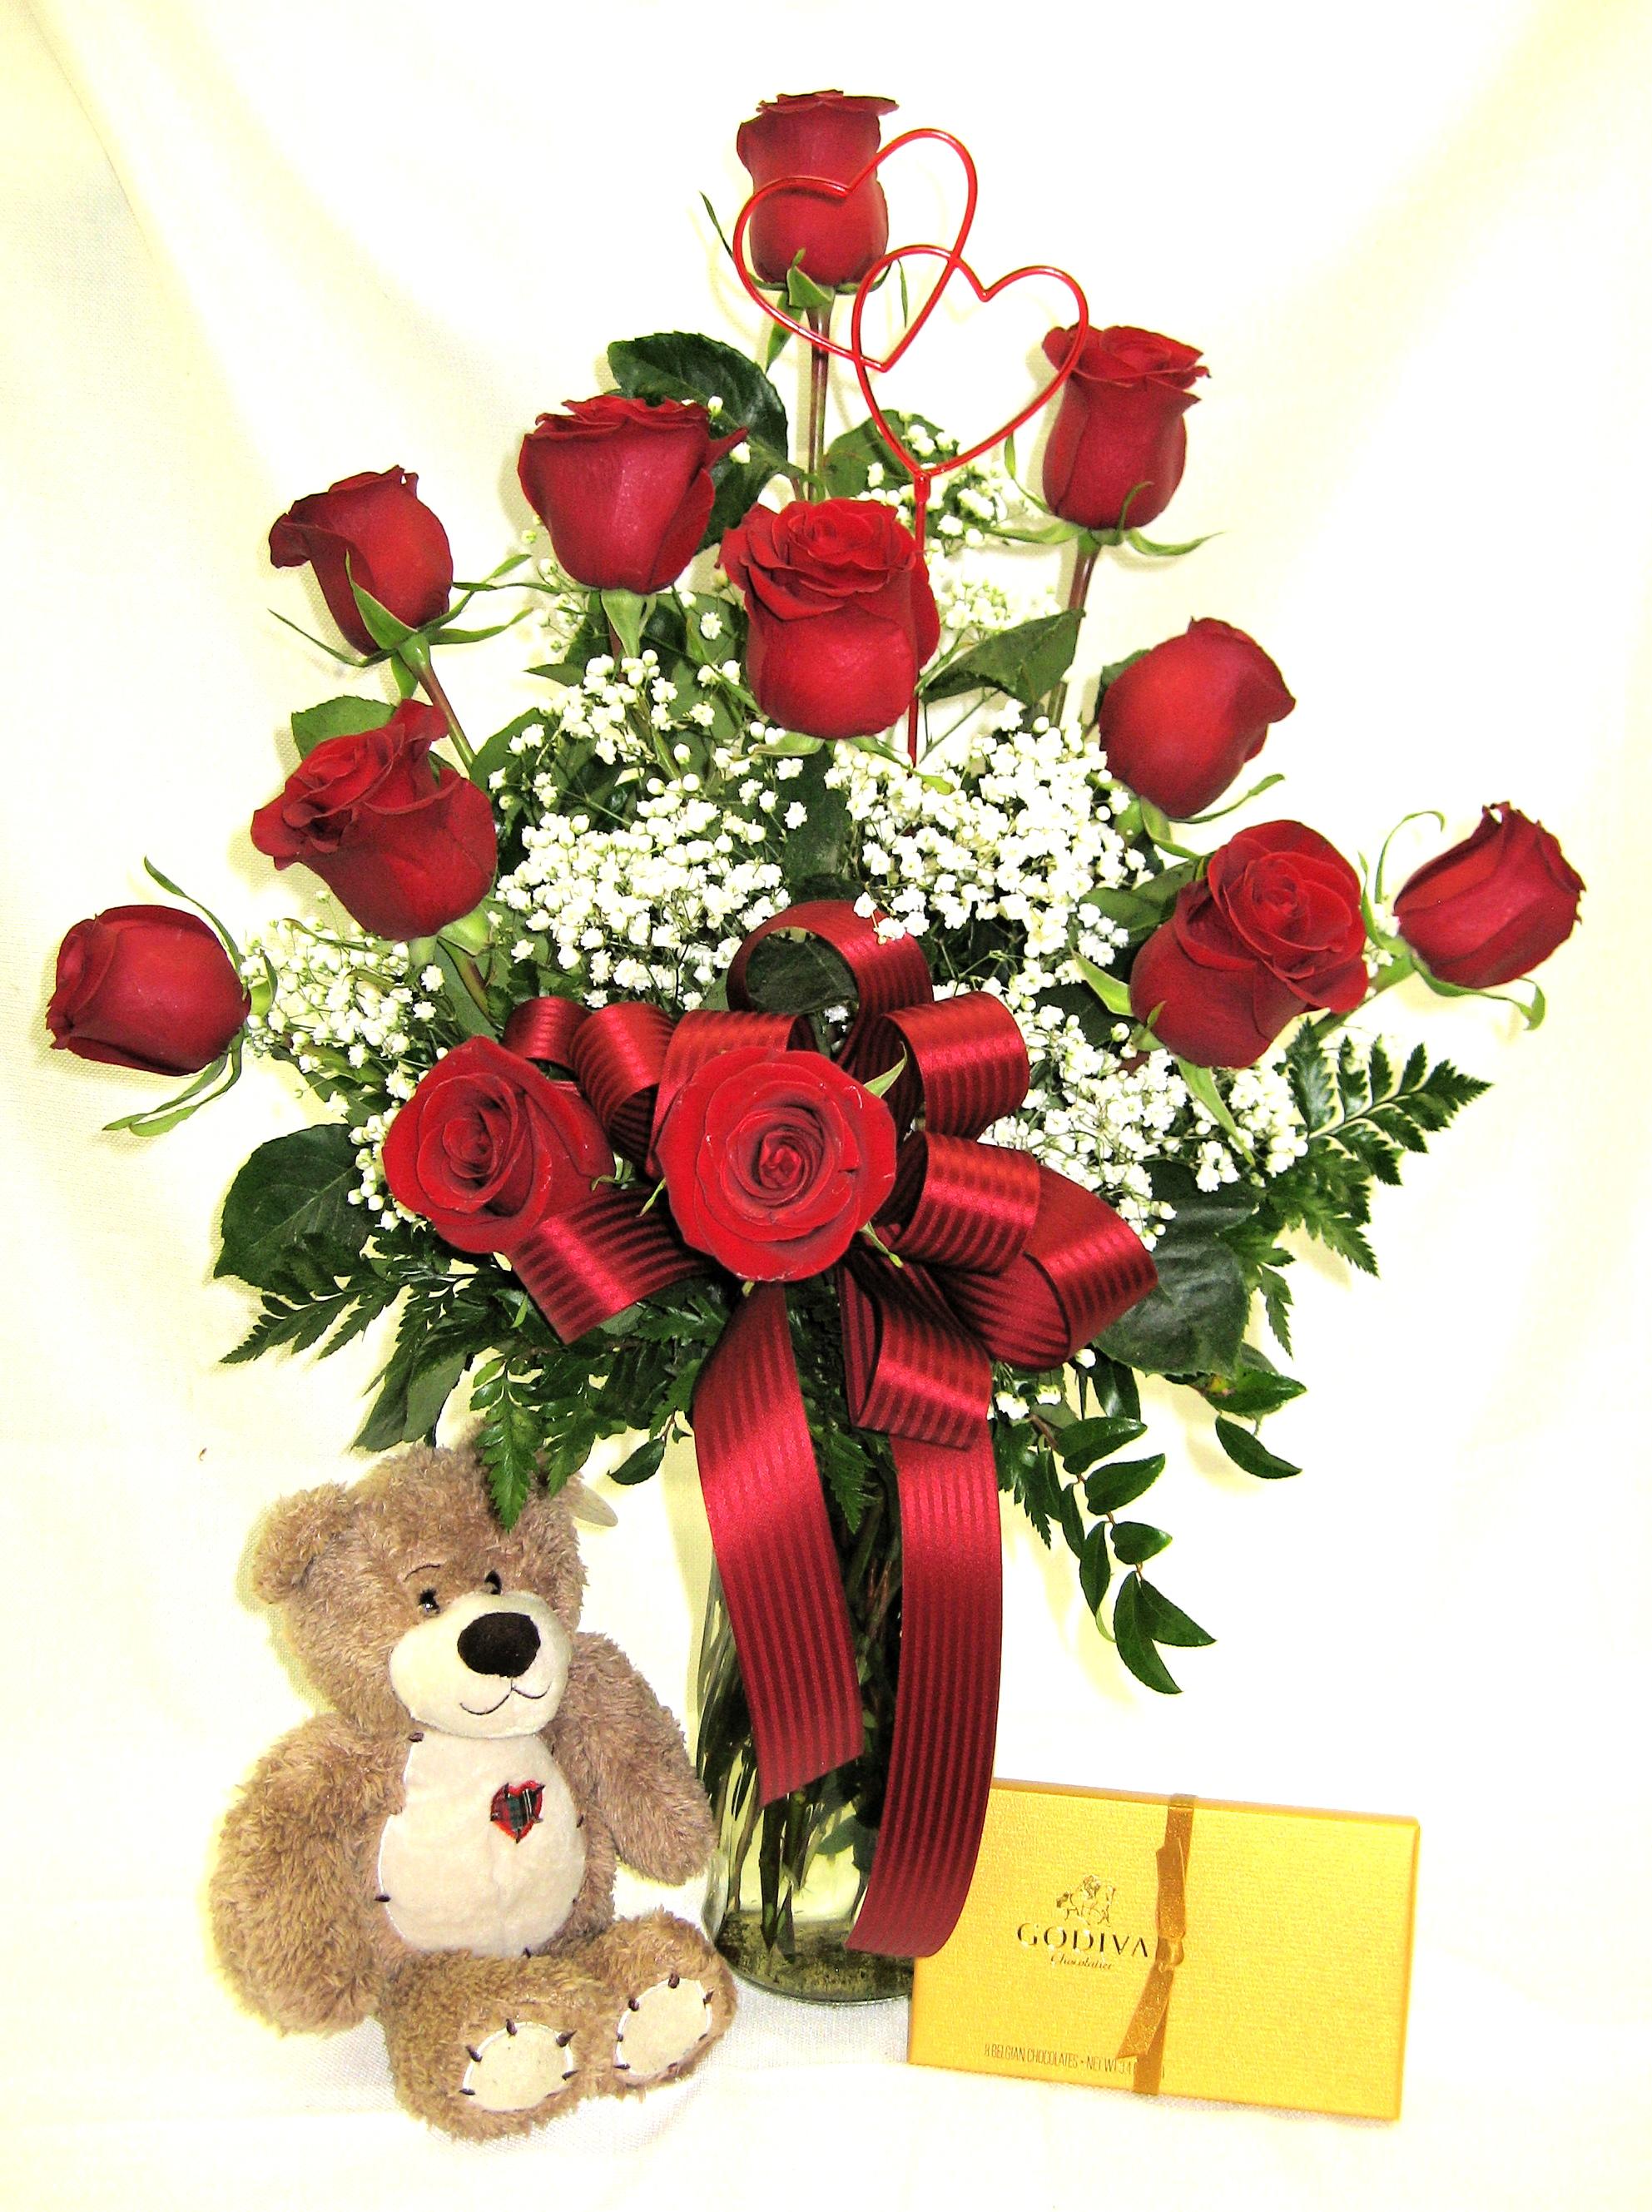 Stunning Valentine bouquets guaranteed to impress!